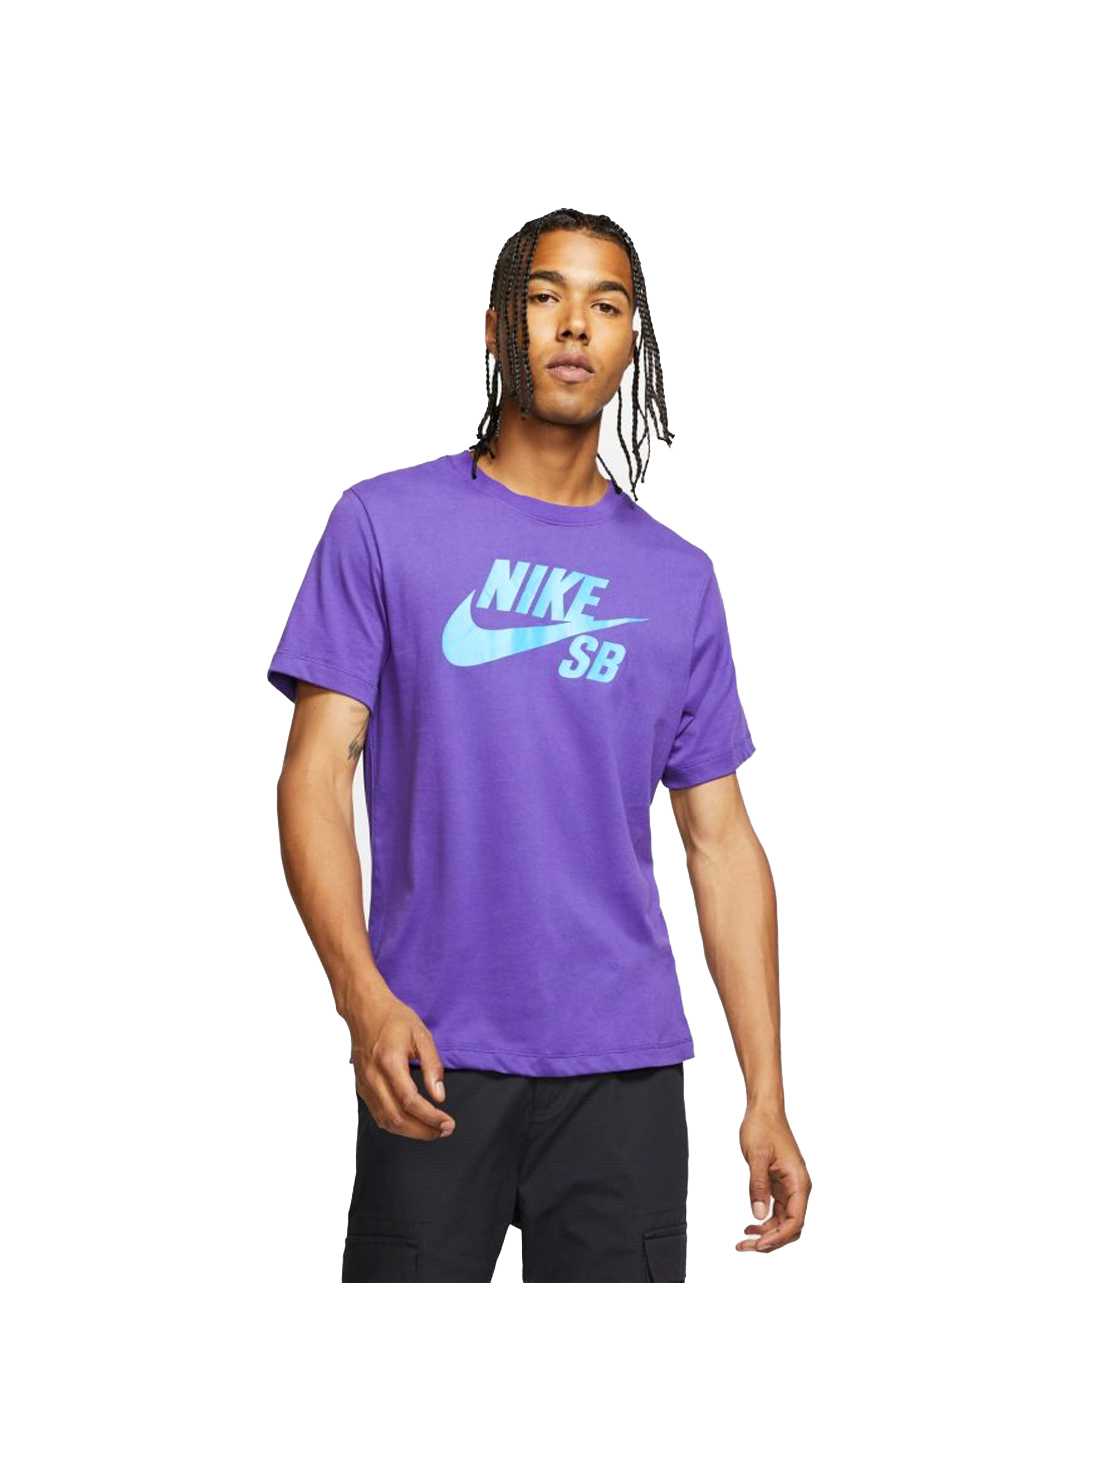 purple and teal nike shirt